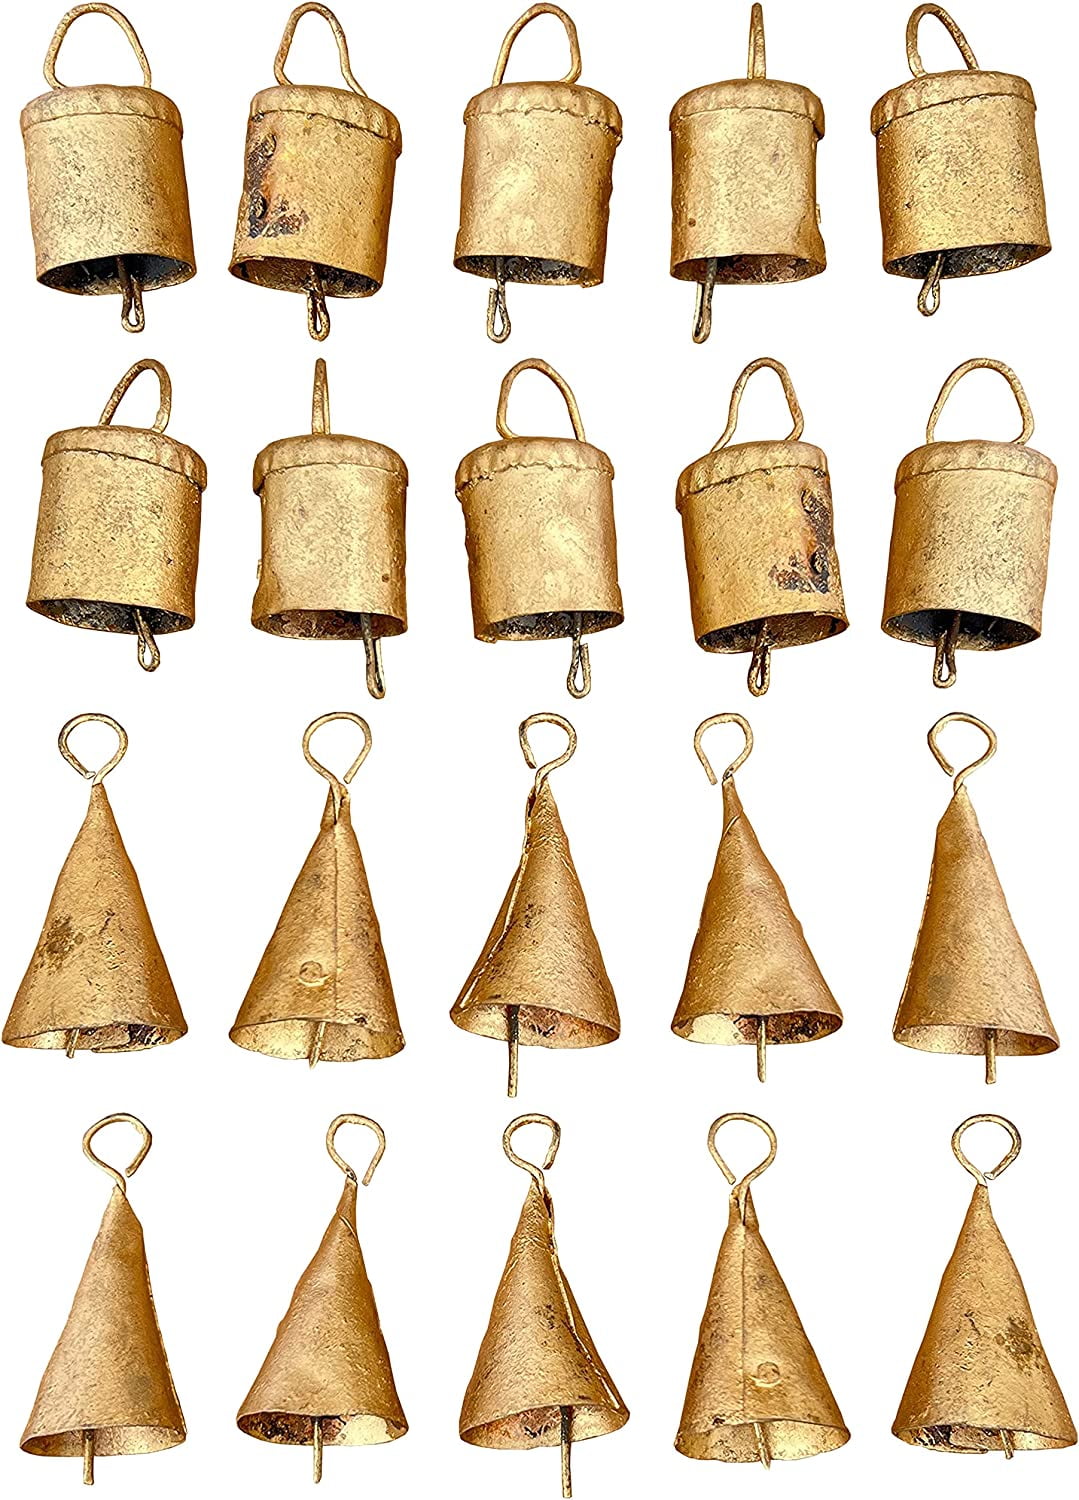  Craft Bells,20PCS Colorful Jingle Bells for Crafts,4